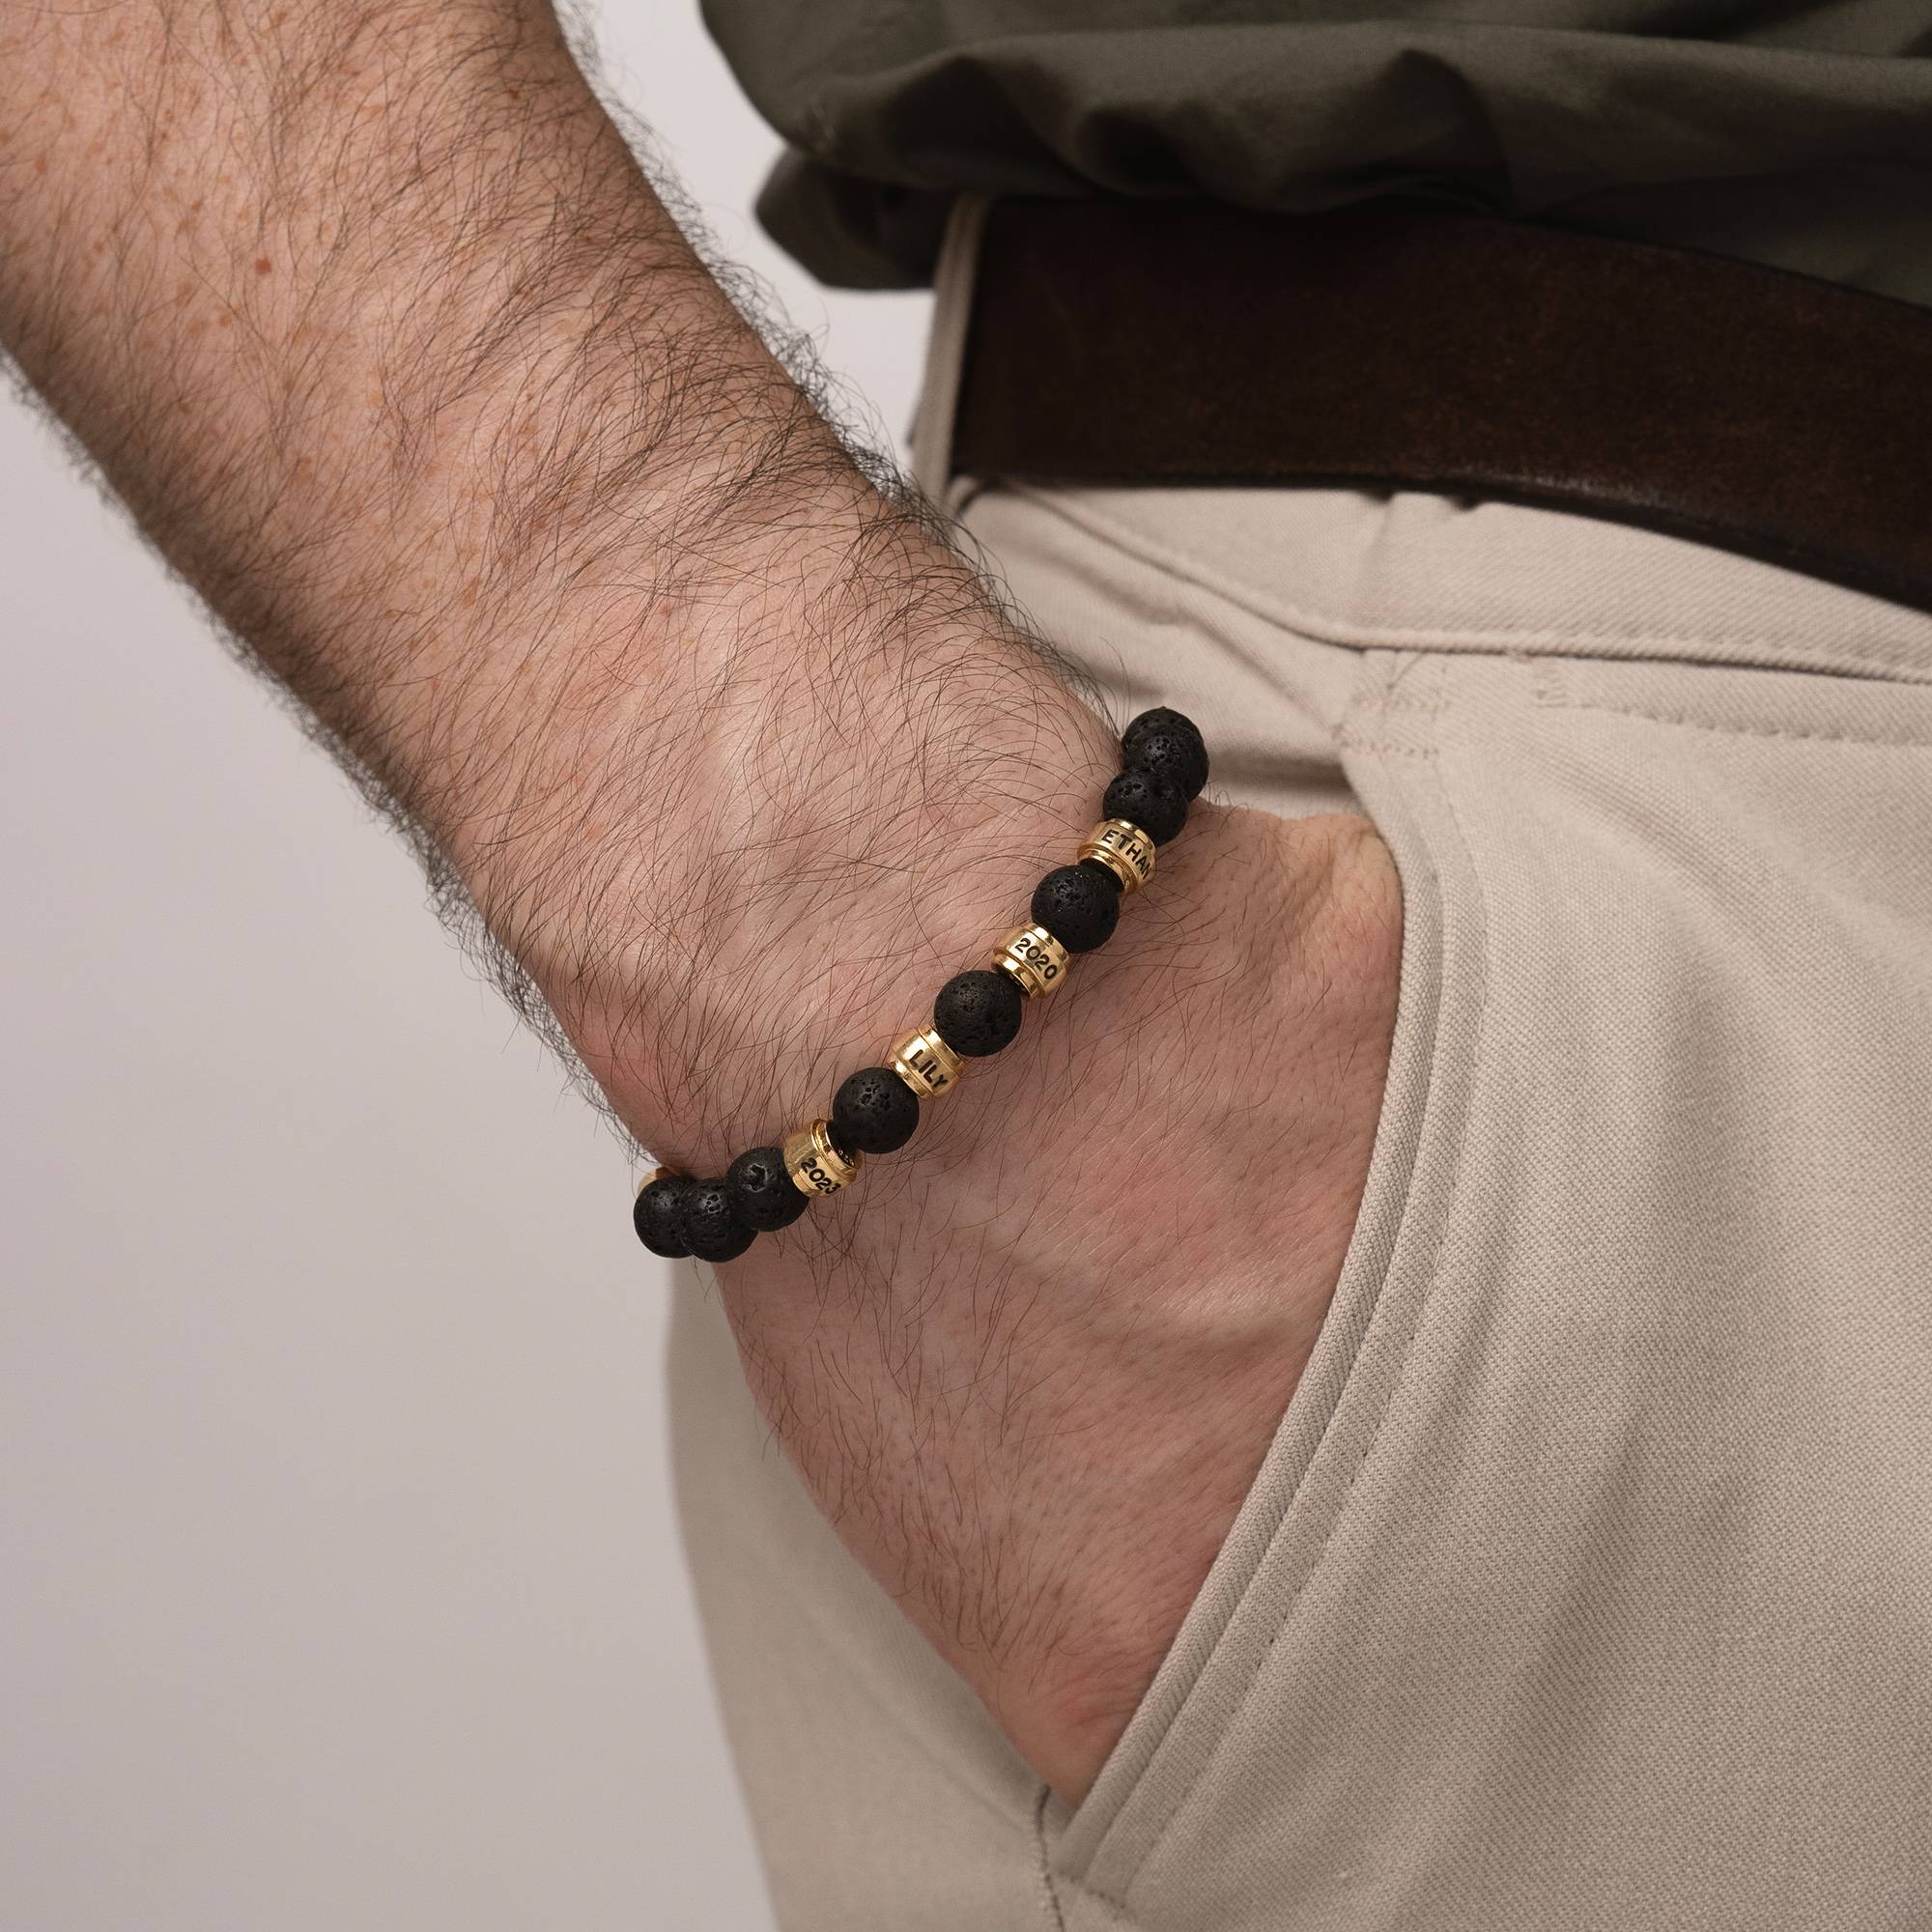 Jack Lavastein Herrenarmband mit personalisierten vergoldeten Beads-2 Produktfoto